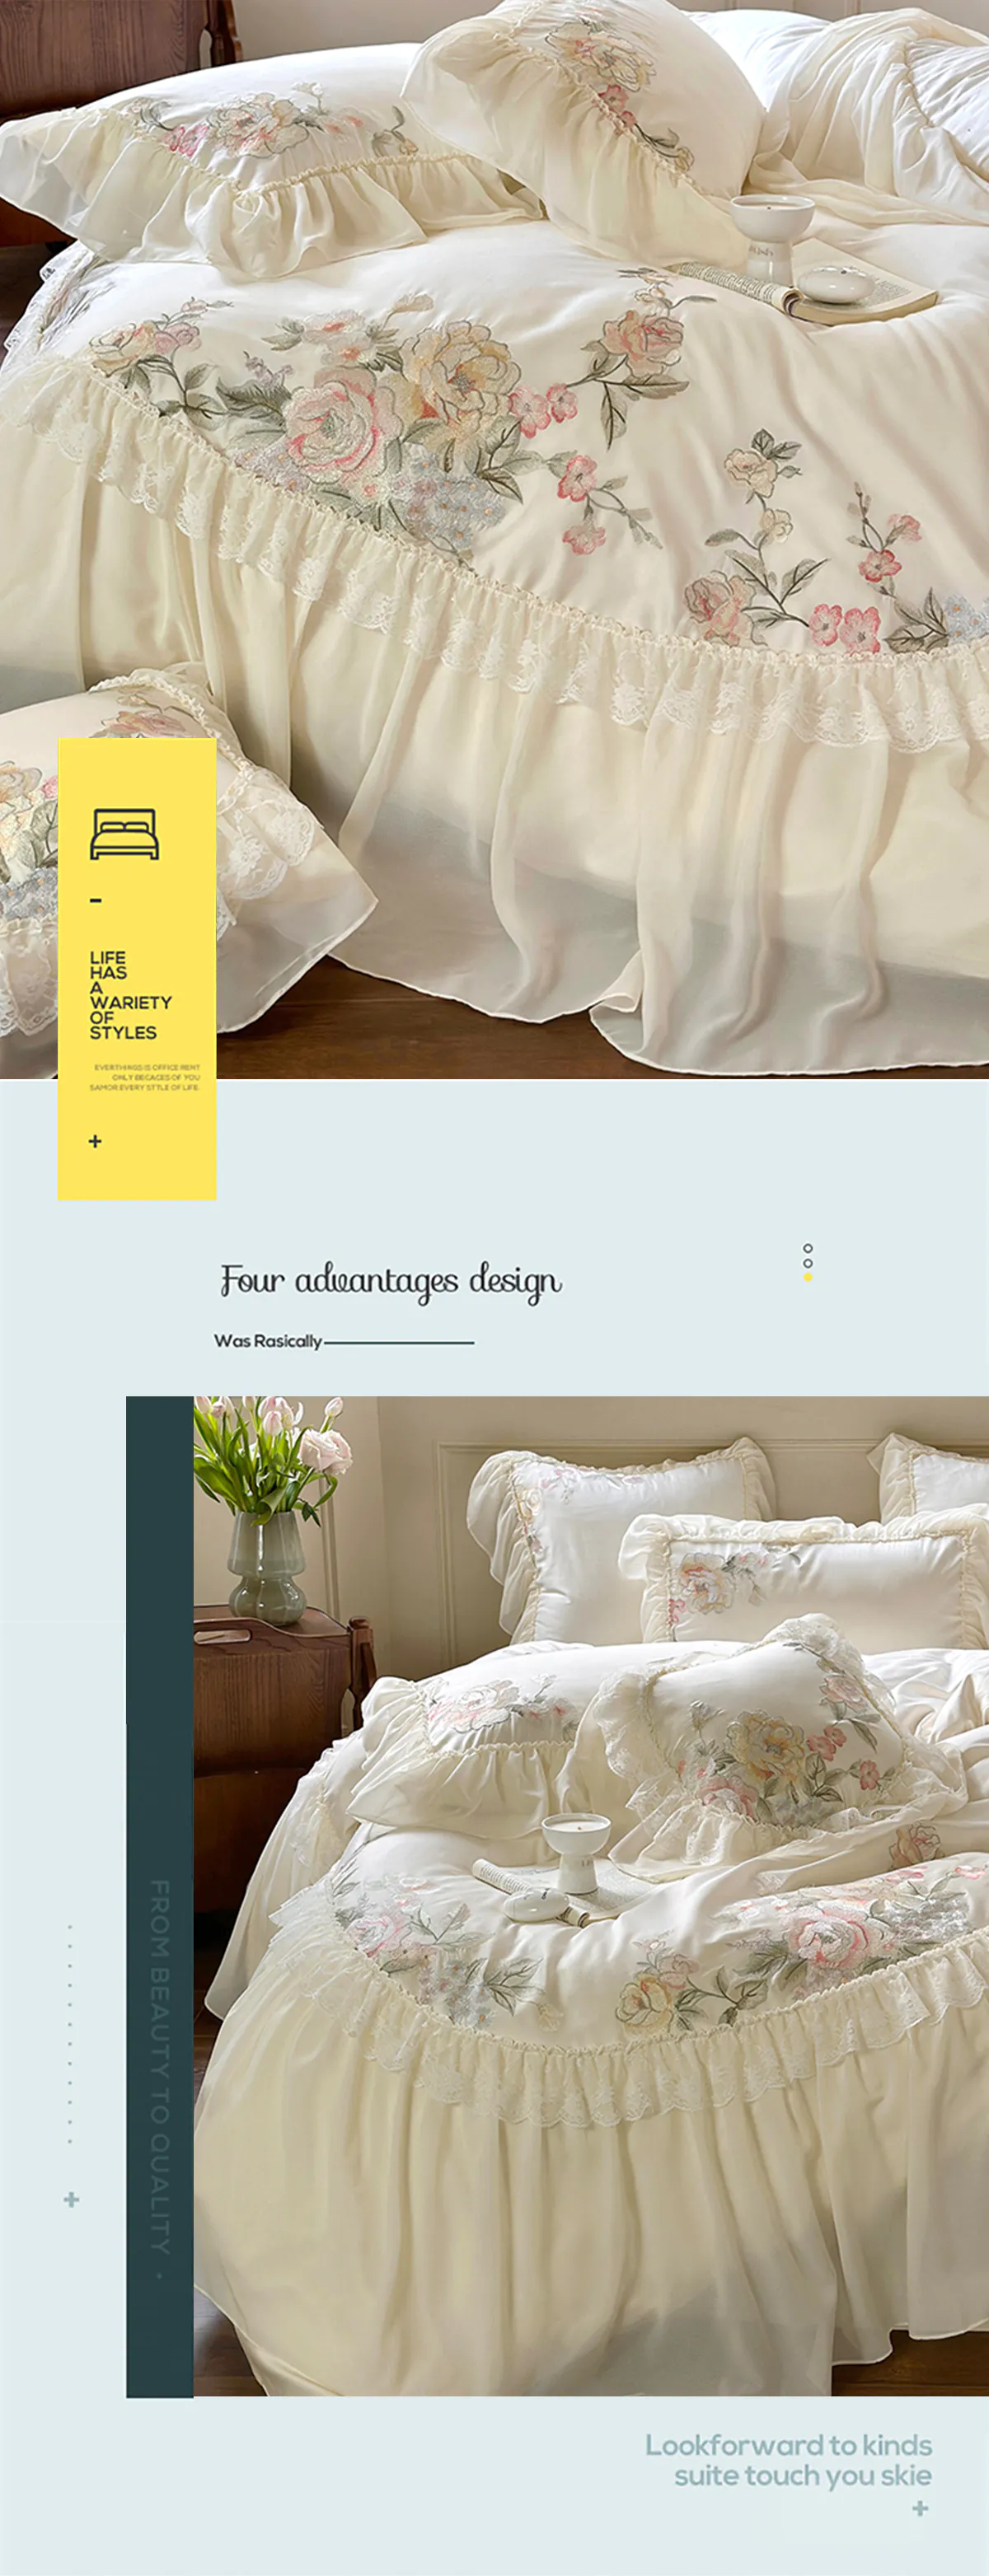 Luxury-Long-Staple-Cotton-Embroidery-Ruffle-Lace-Trim-Bedding-Set12